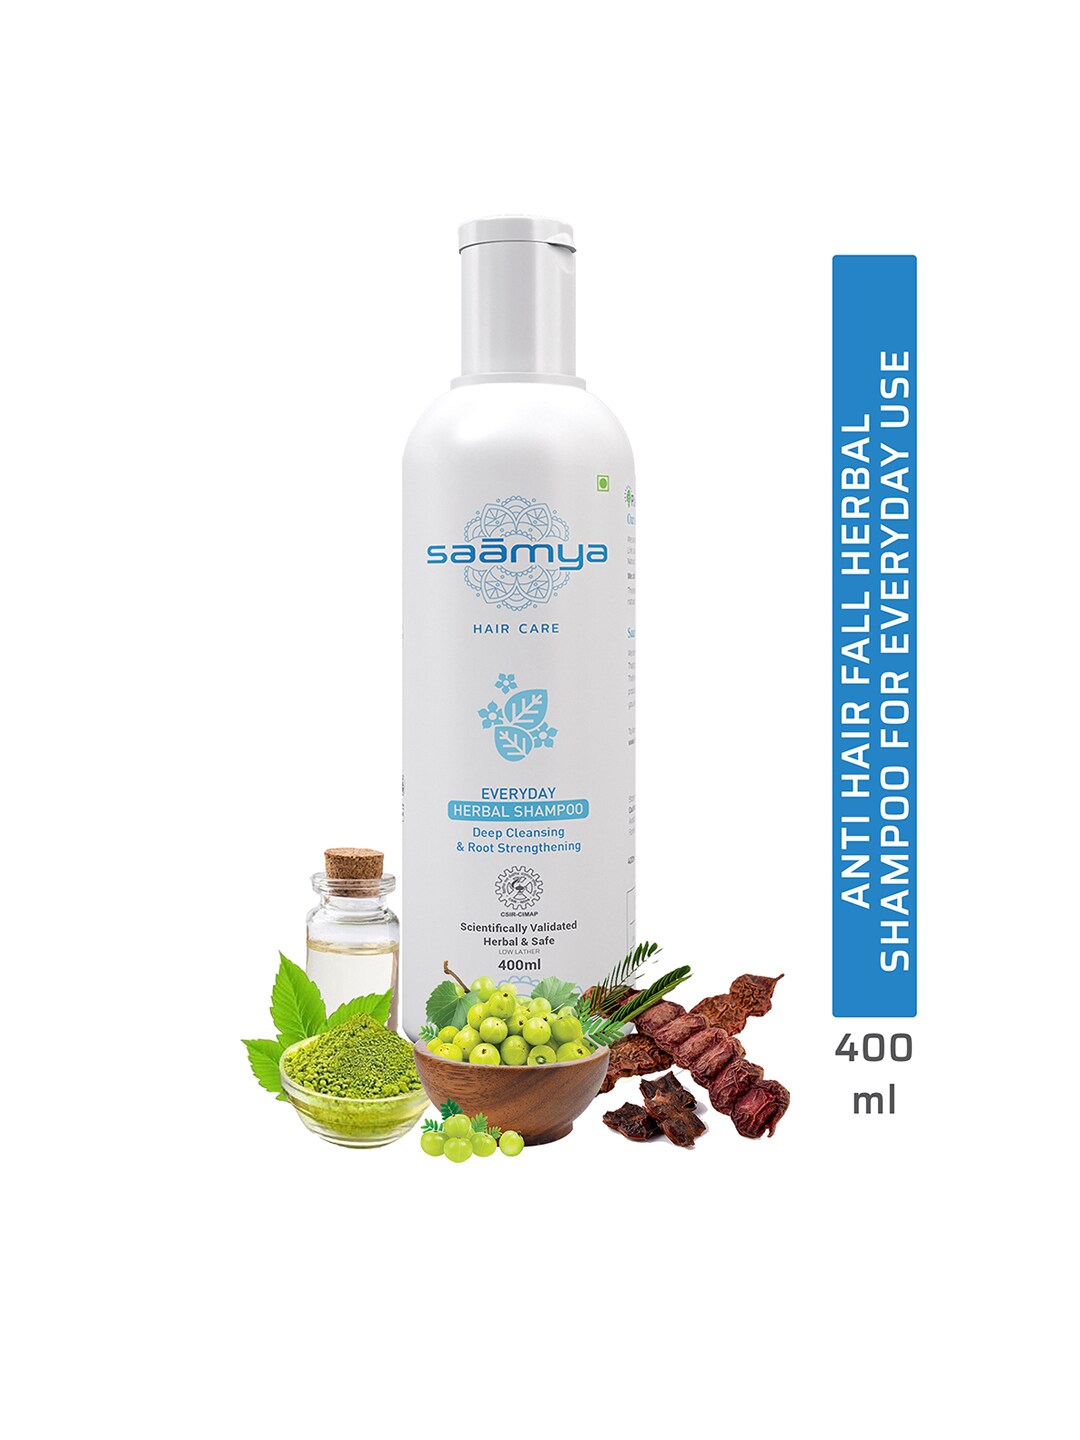 Saamya Everyday Herbal Sustainable Shampoo 400 ml Price in India